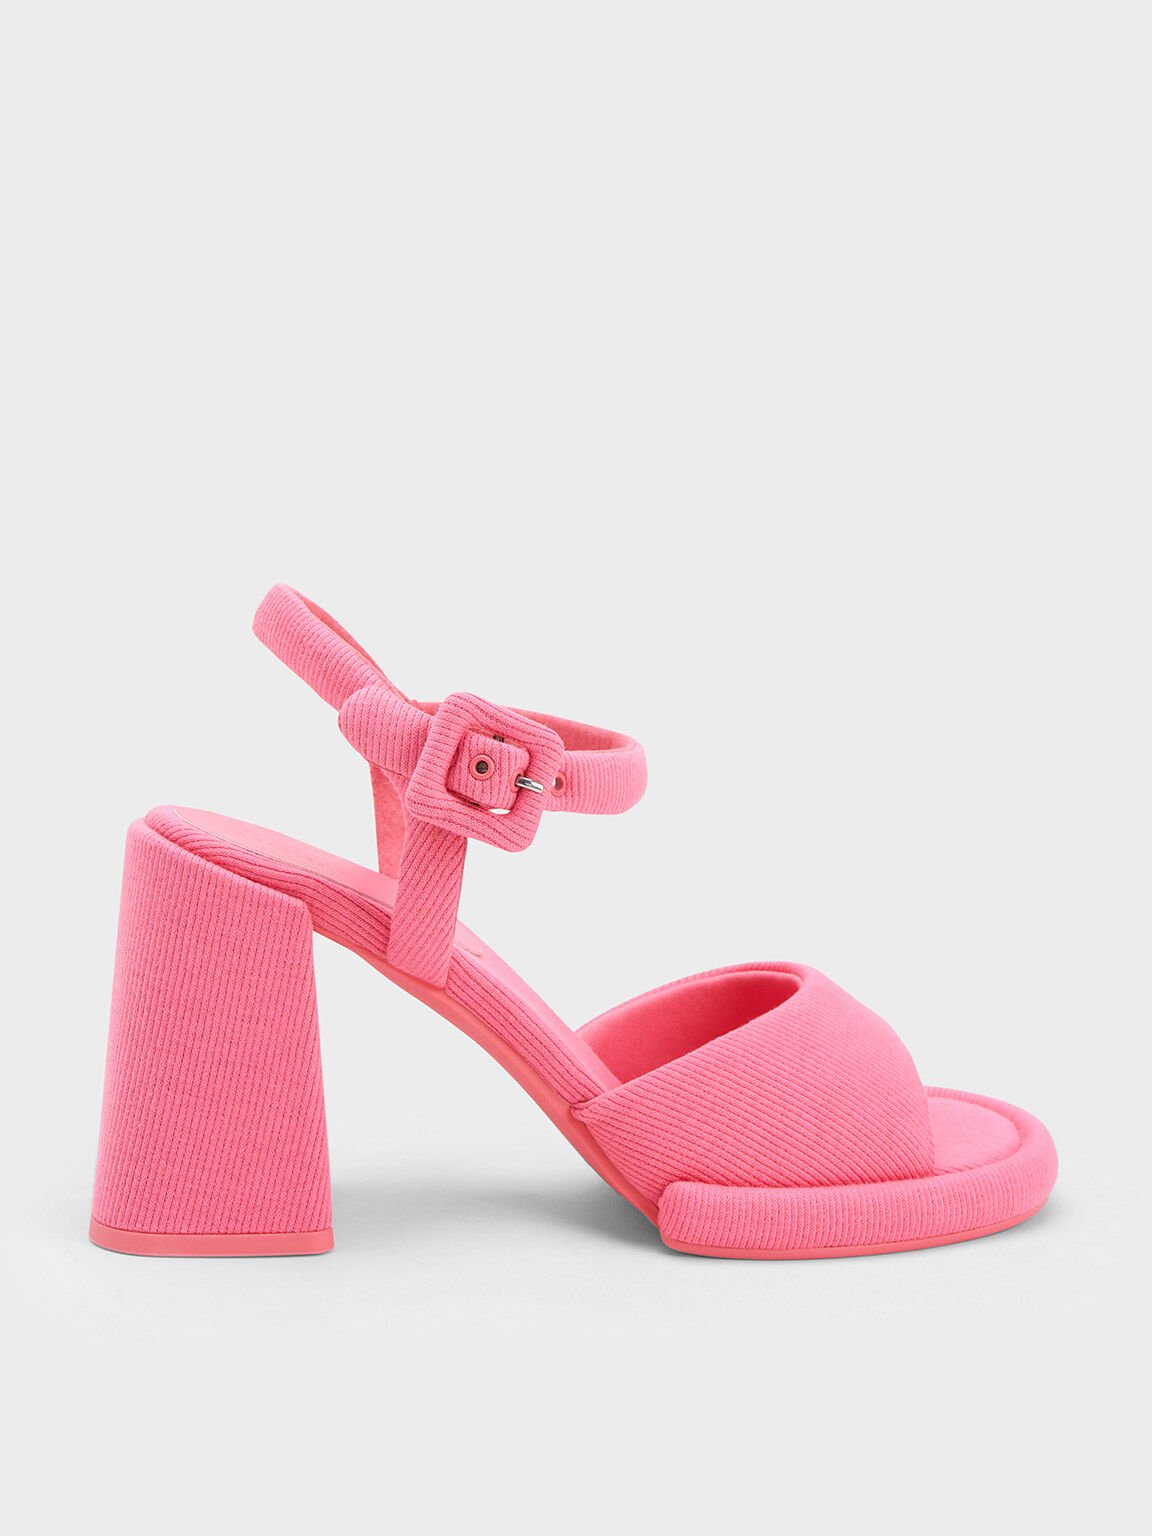 方釦粗跟涼鞋, 粉紅色, hi-res